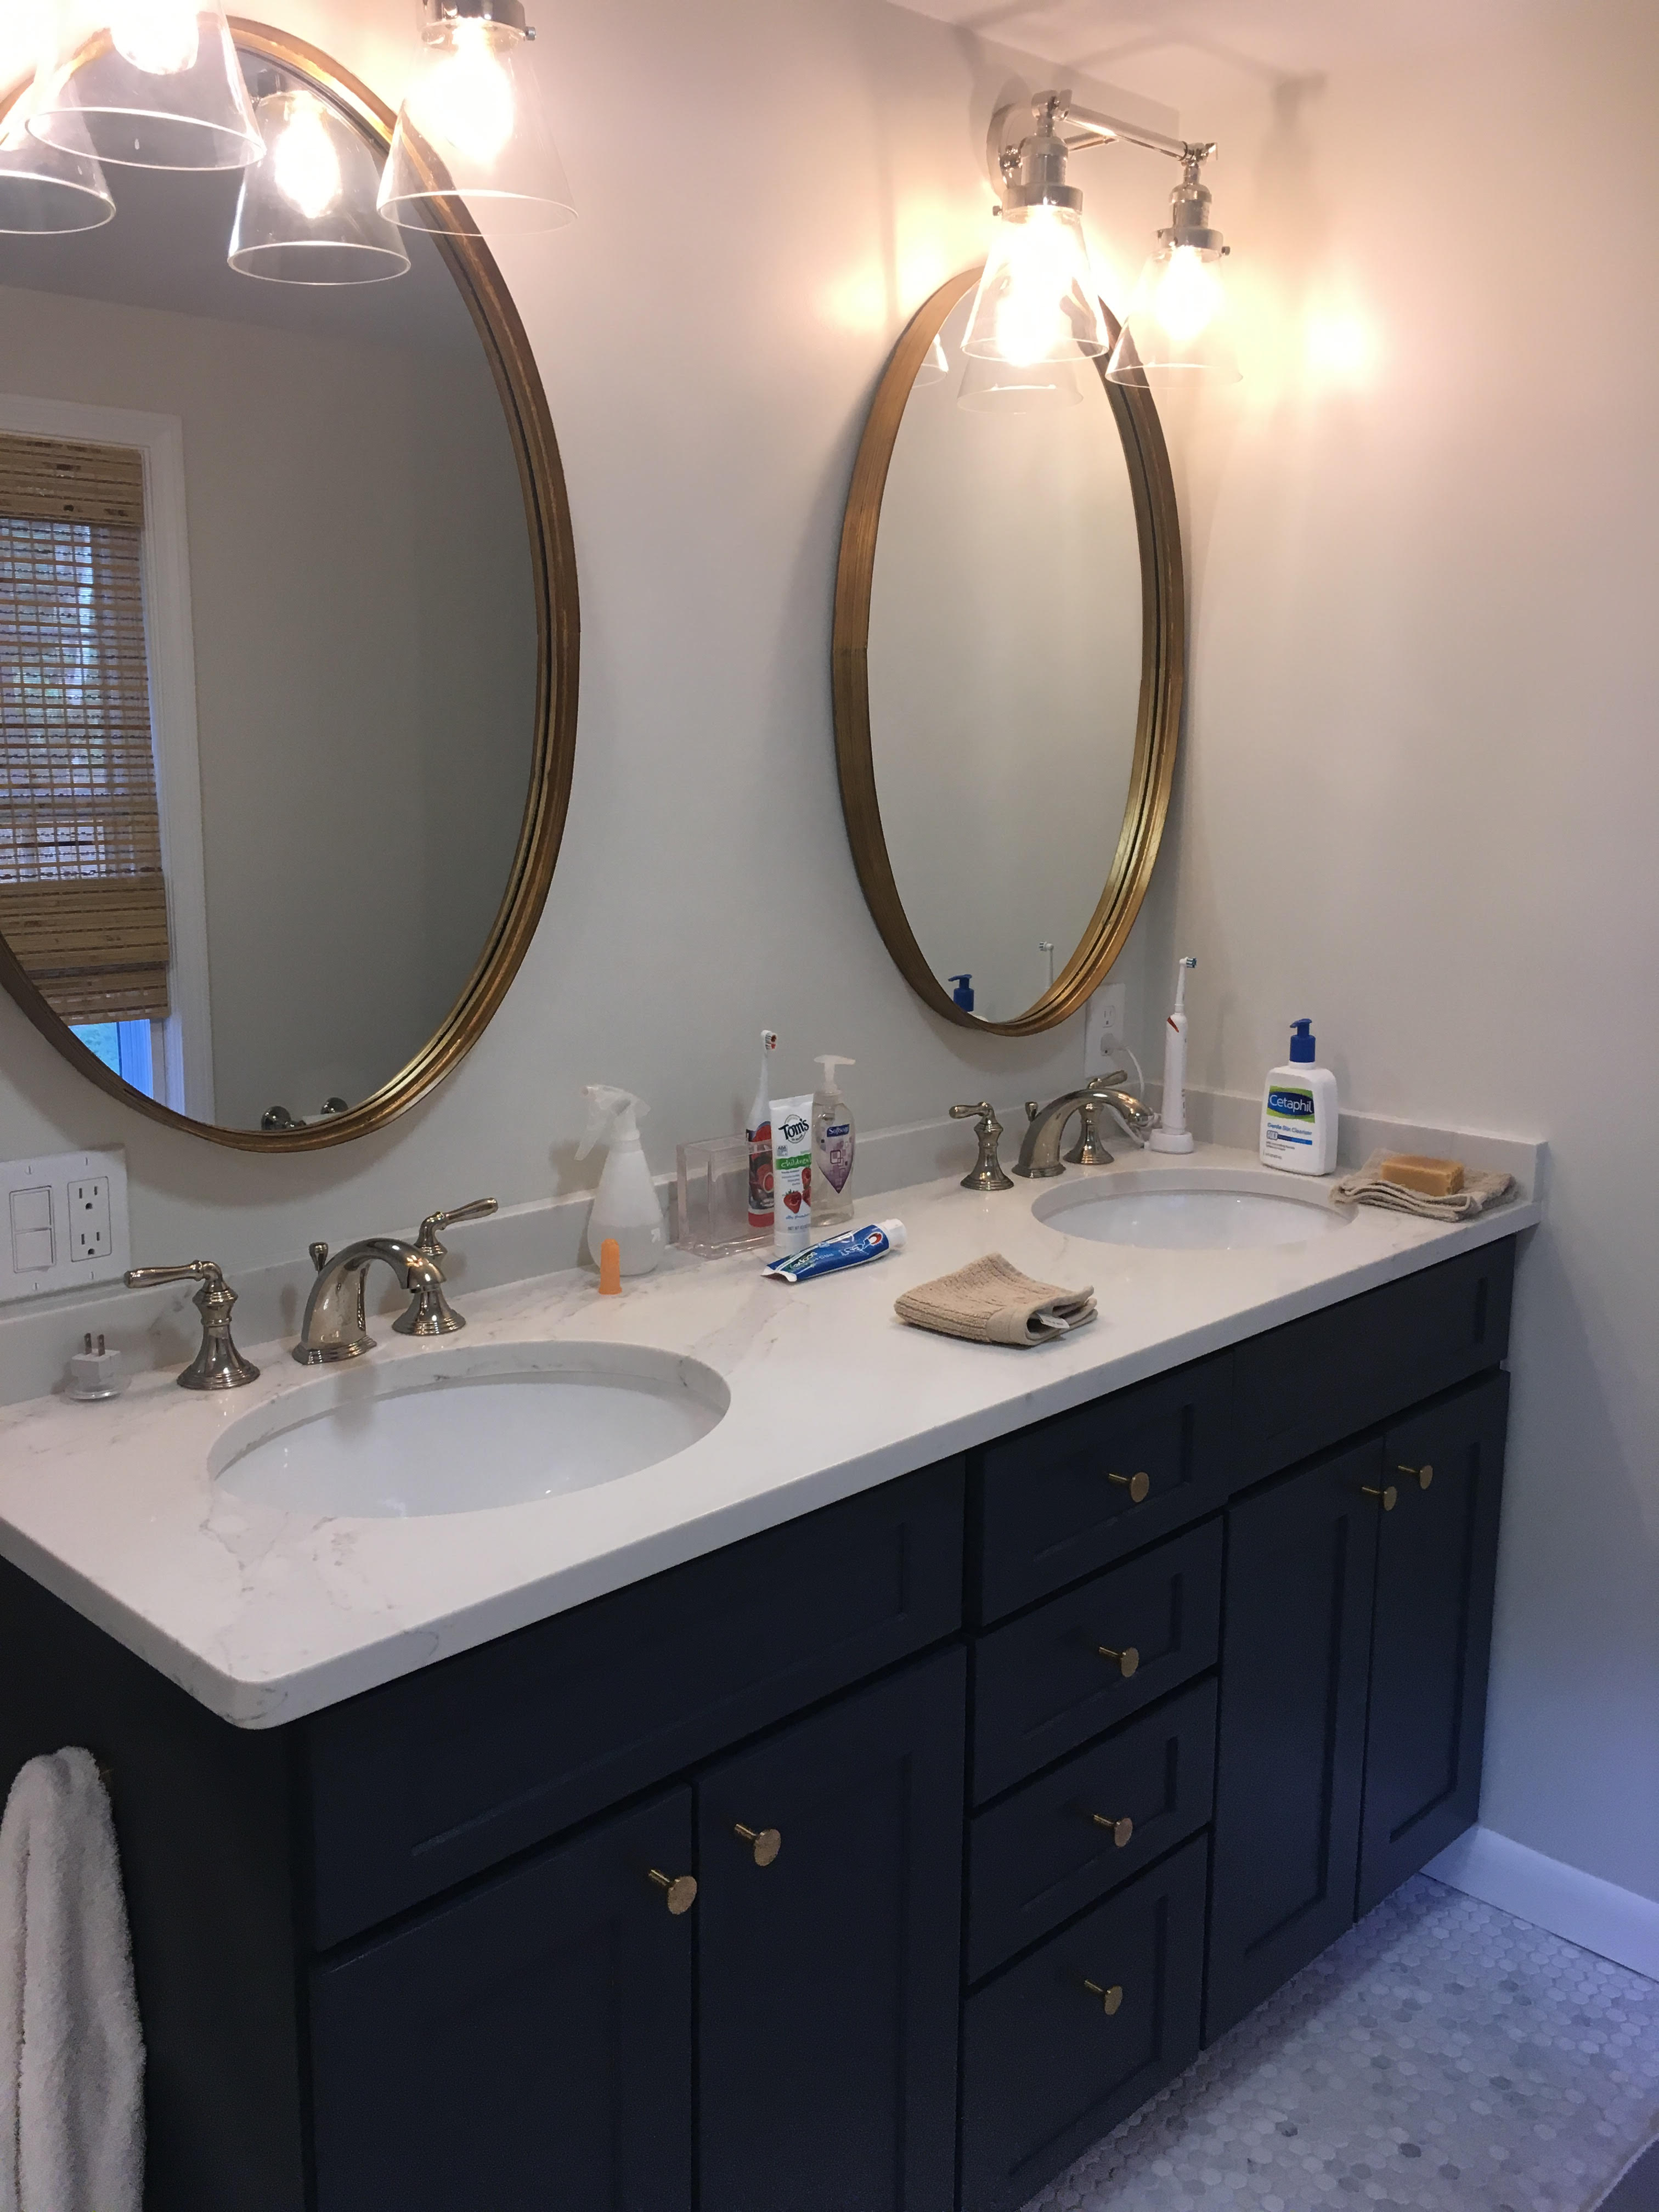 Two mirror and sink bathroom vanity